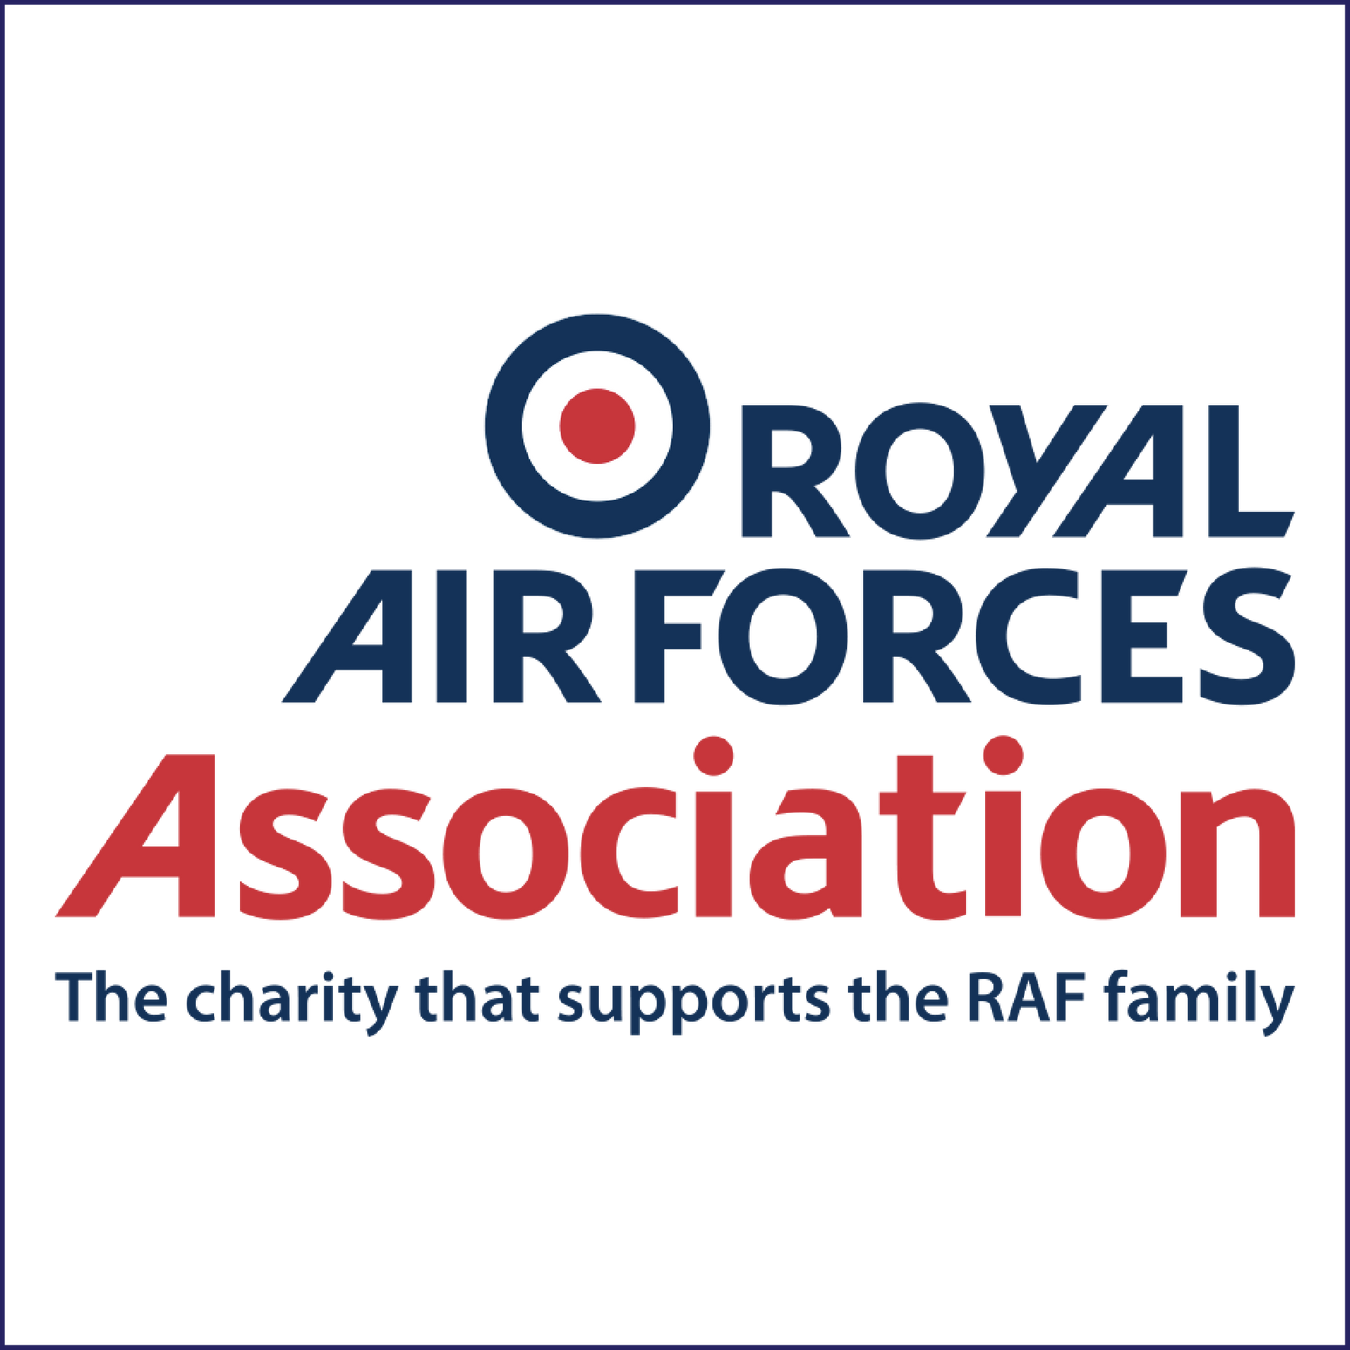 Royal Airforces Association